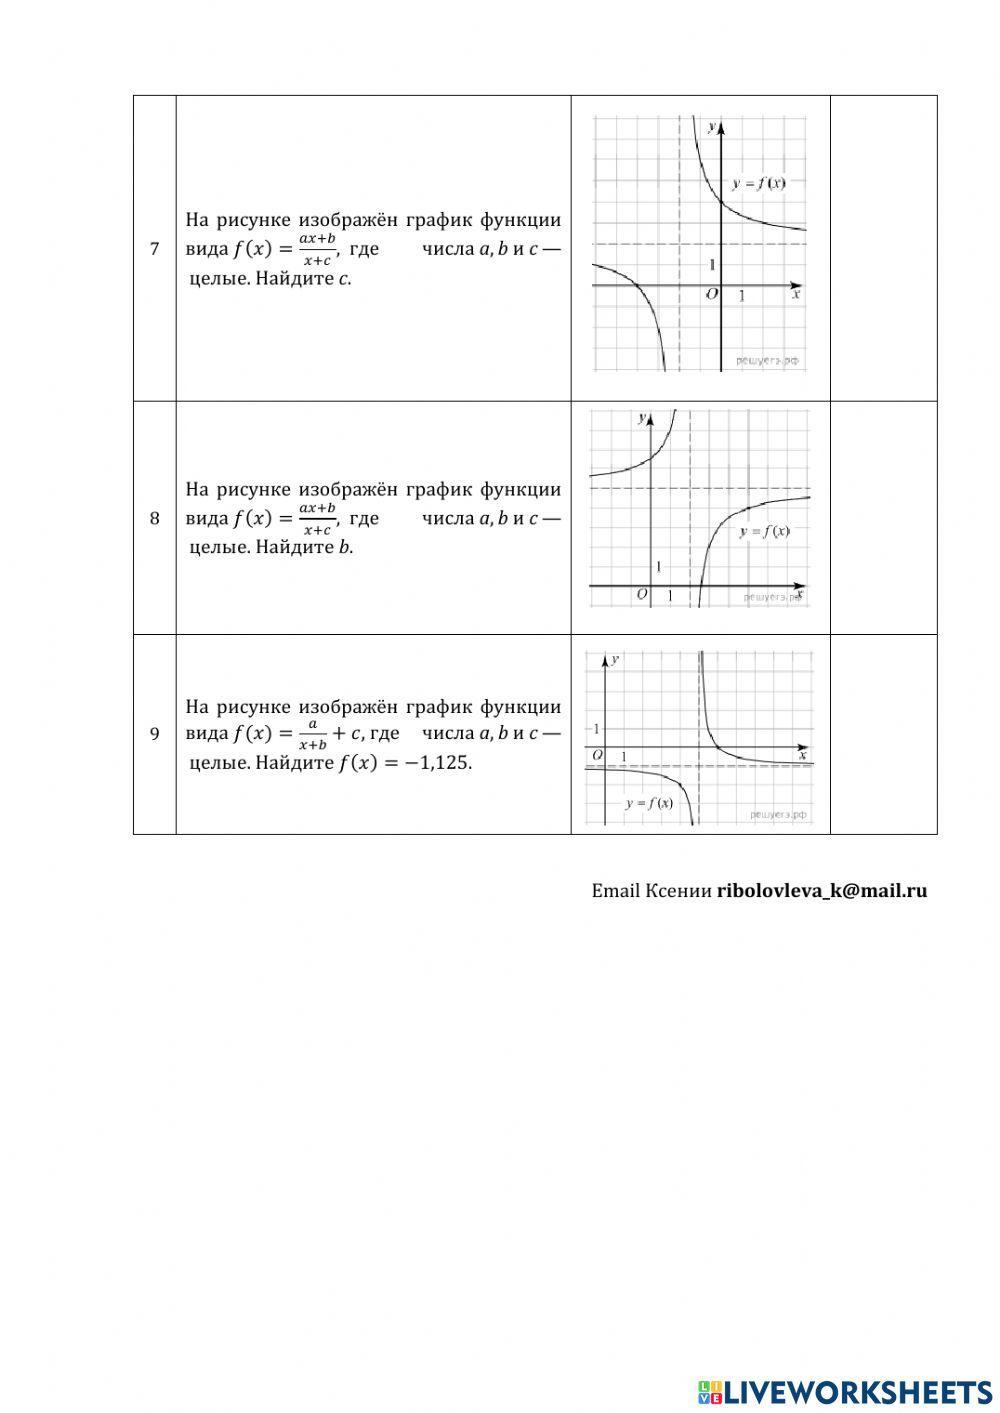 ДЗ 22: графики функций